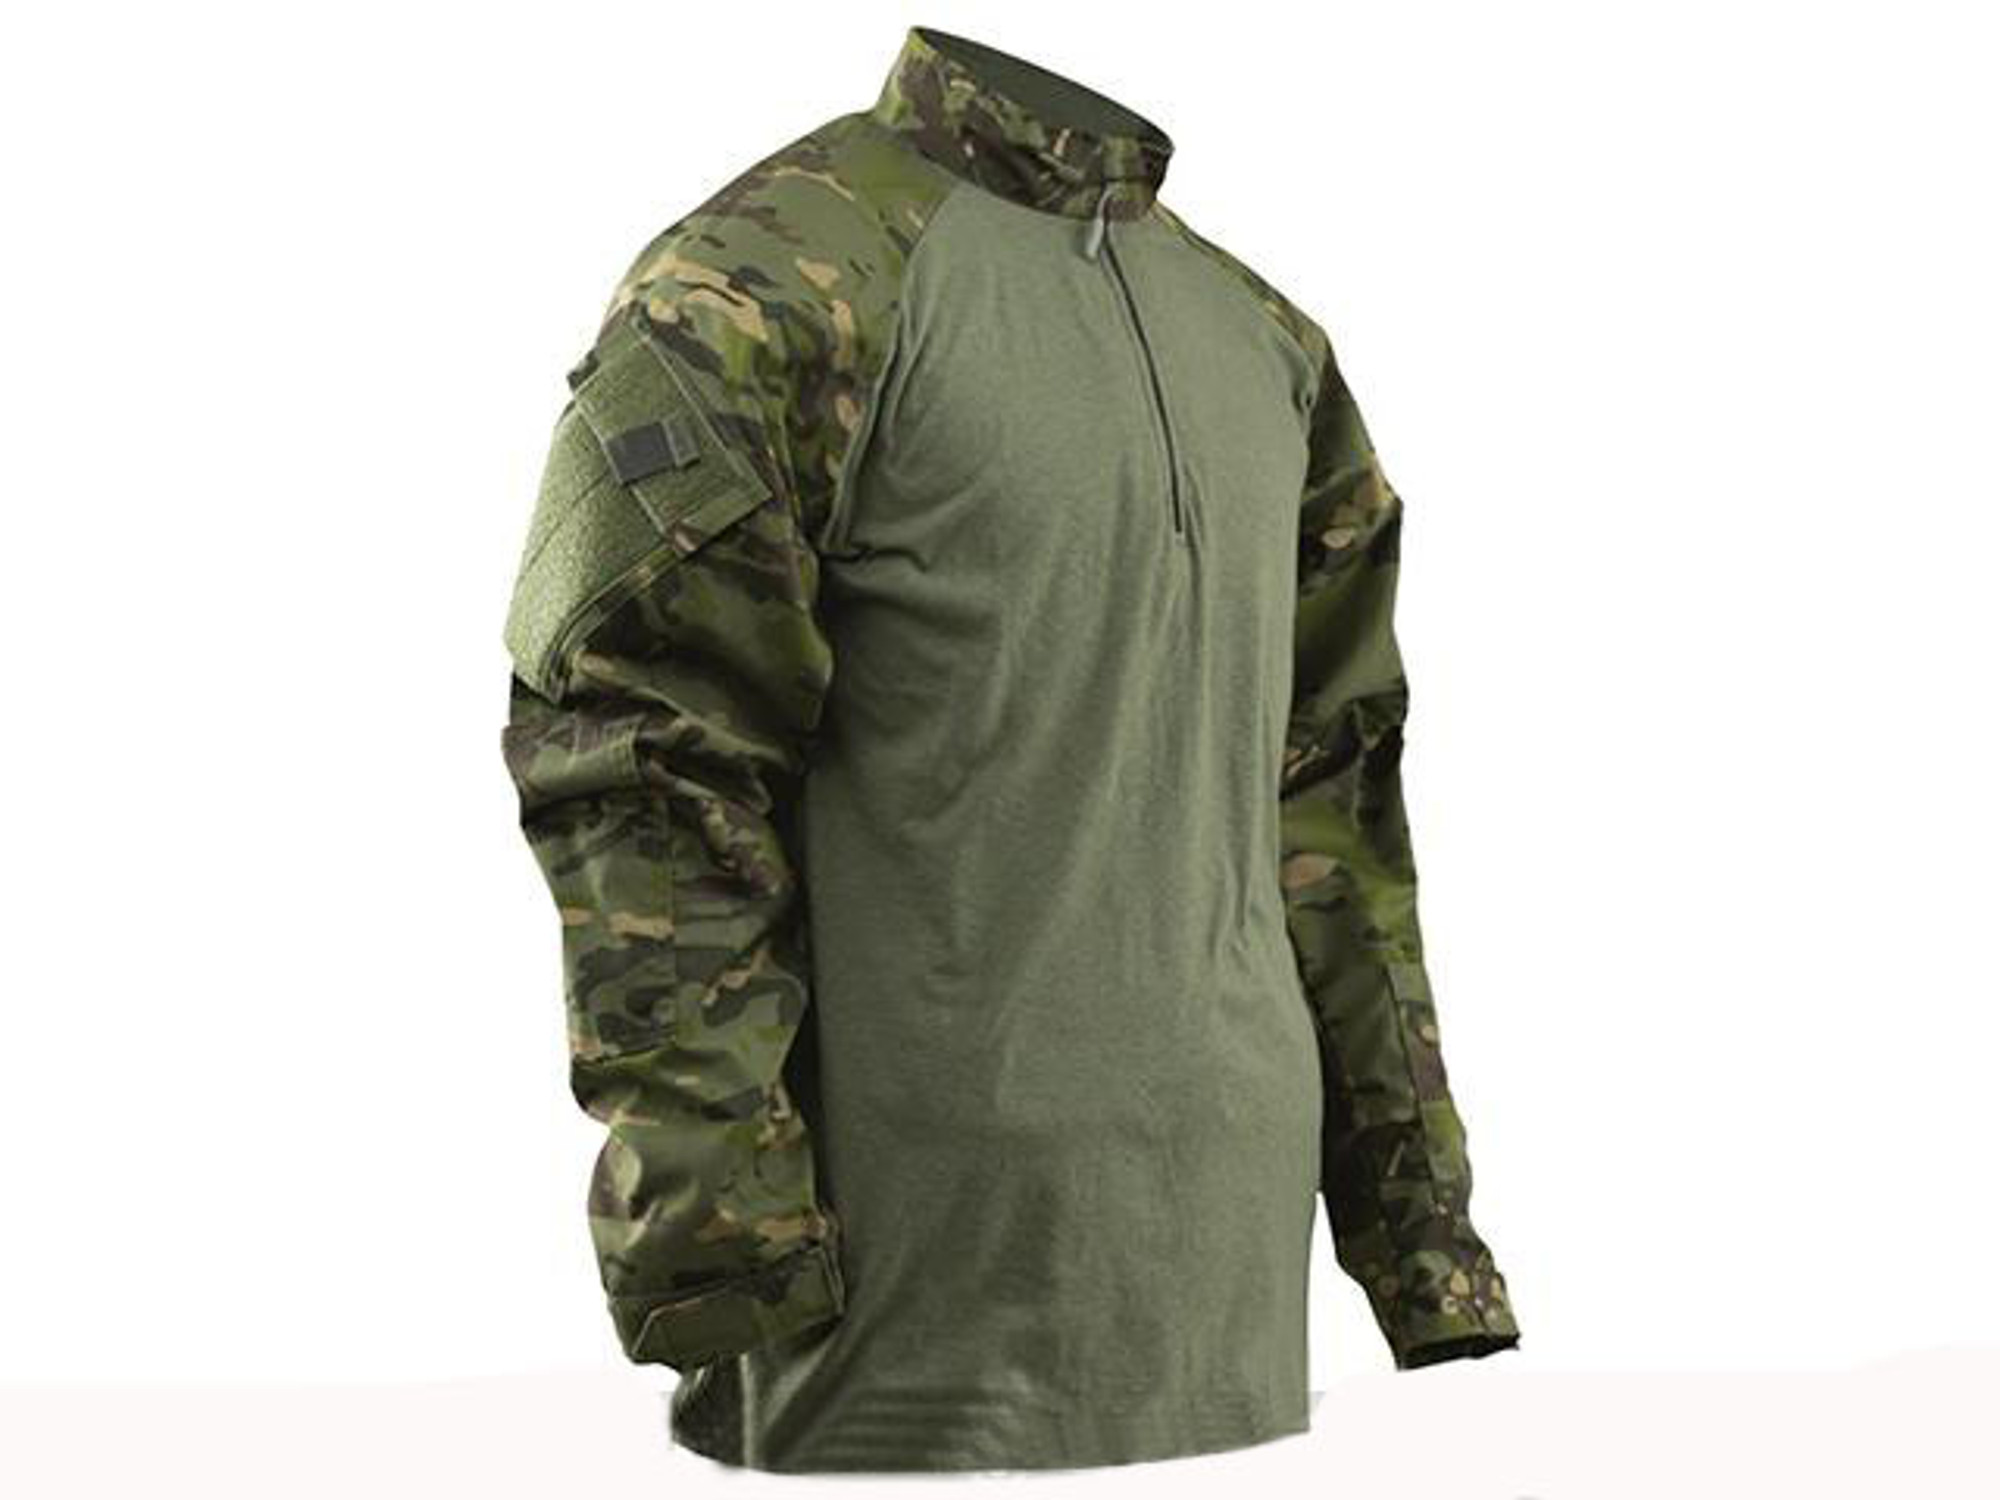 Hero　Small)　Tru-Spec　Response　Multicam　Zip　Shirt　(Size:　Tactical　1/4　Uniform　Combat　Tropic　Outdoors